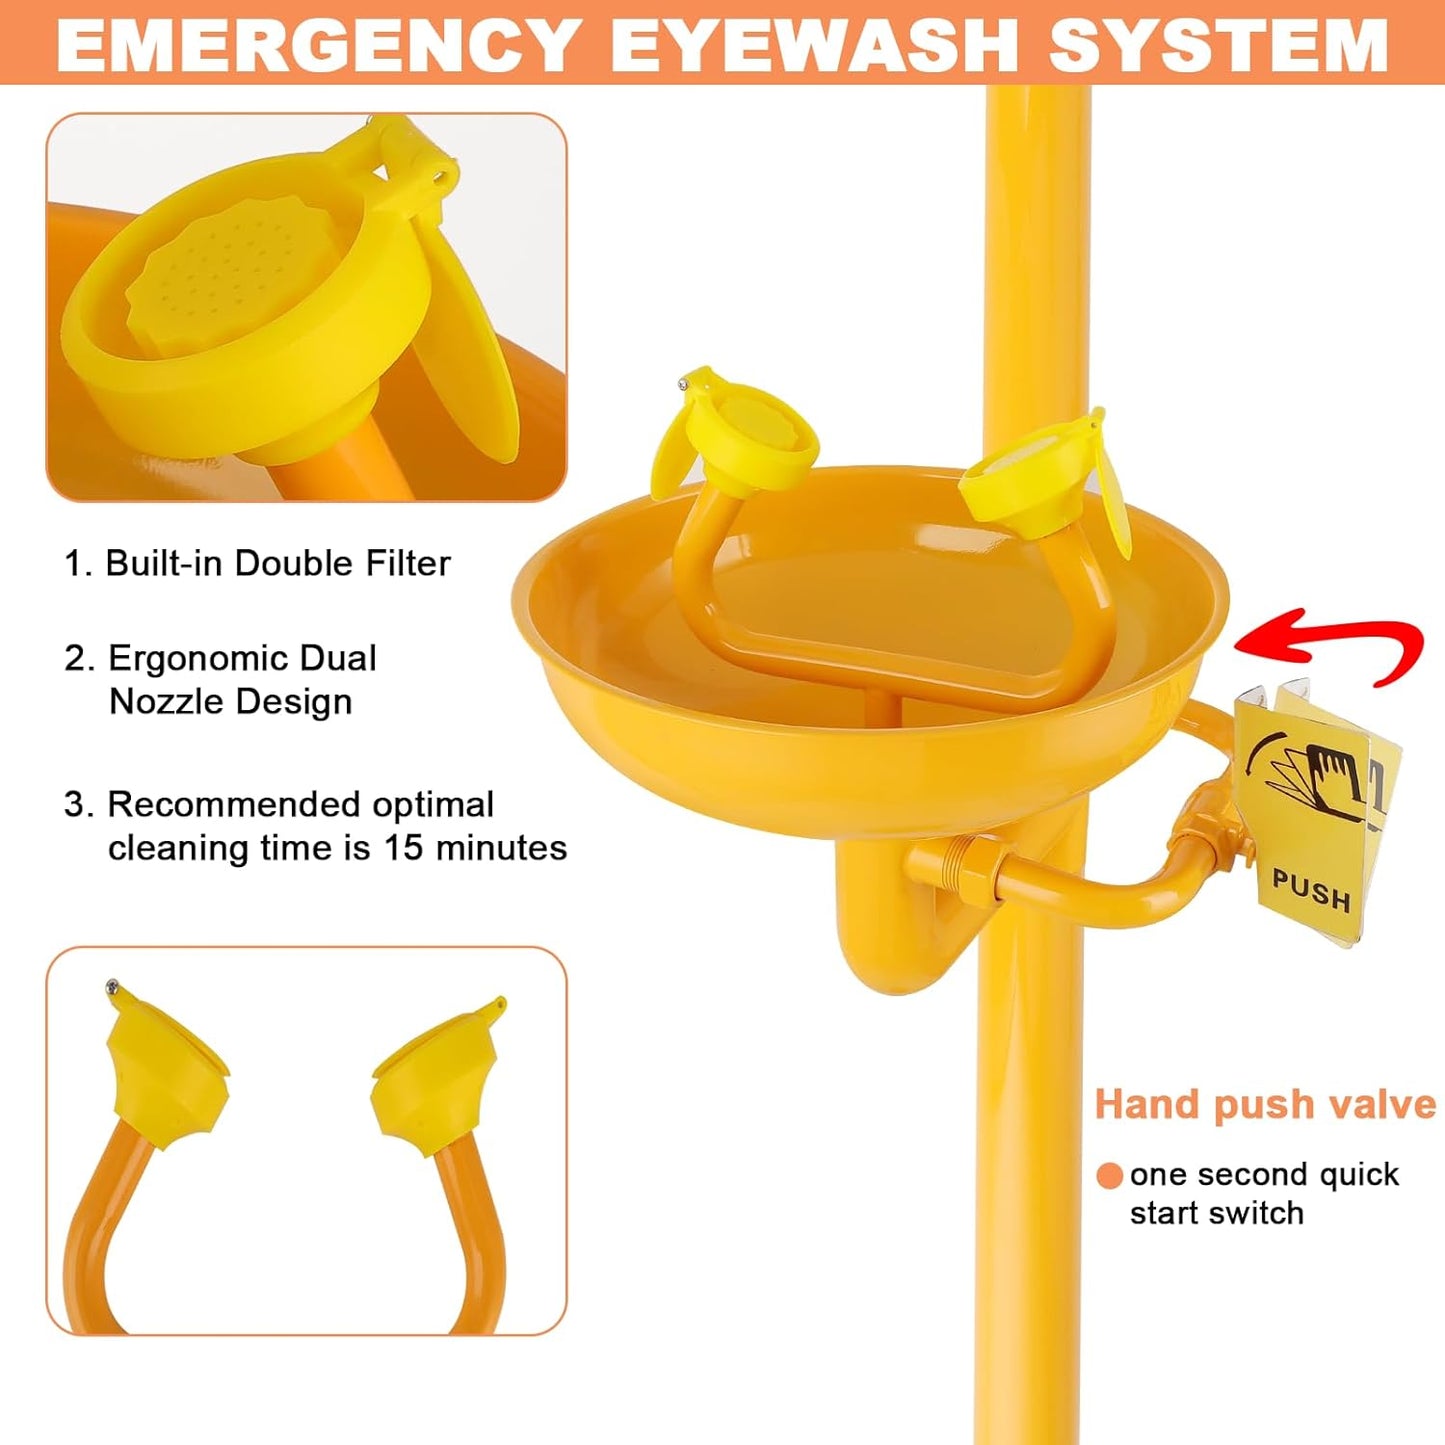 Eye Wash Shower Station Yzzwer - OSHA Approved Emergency Safety Eye Wash and Shower Combination Kit First Aid Eyewash